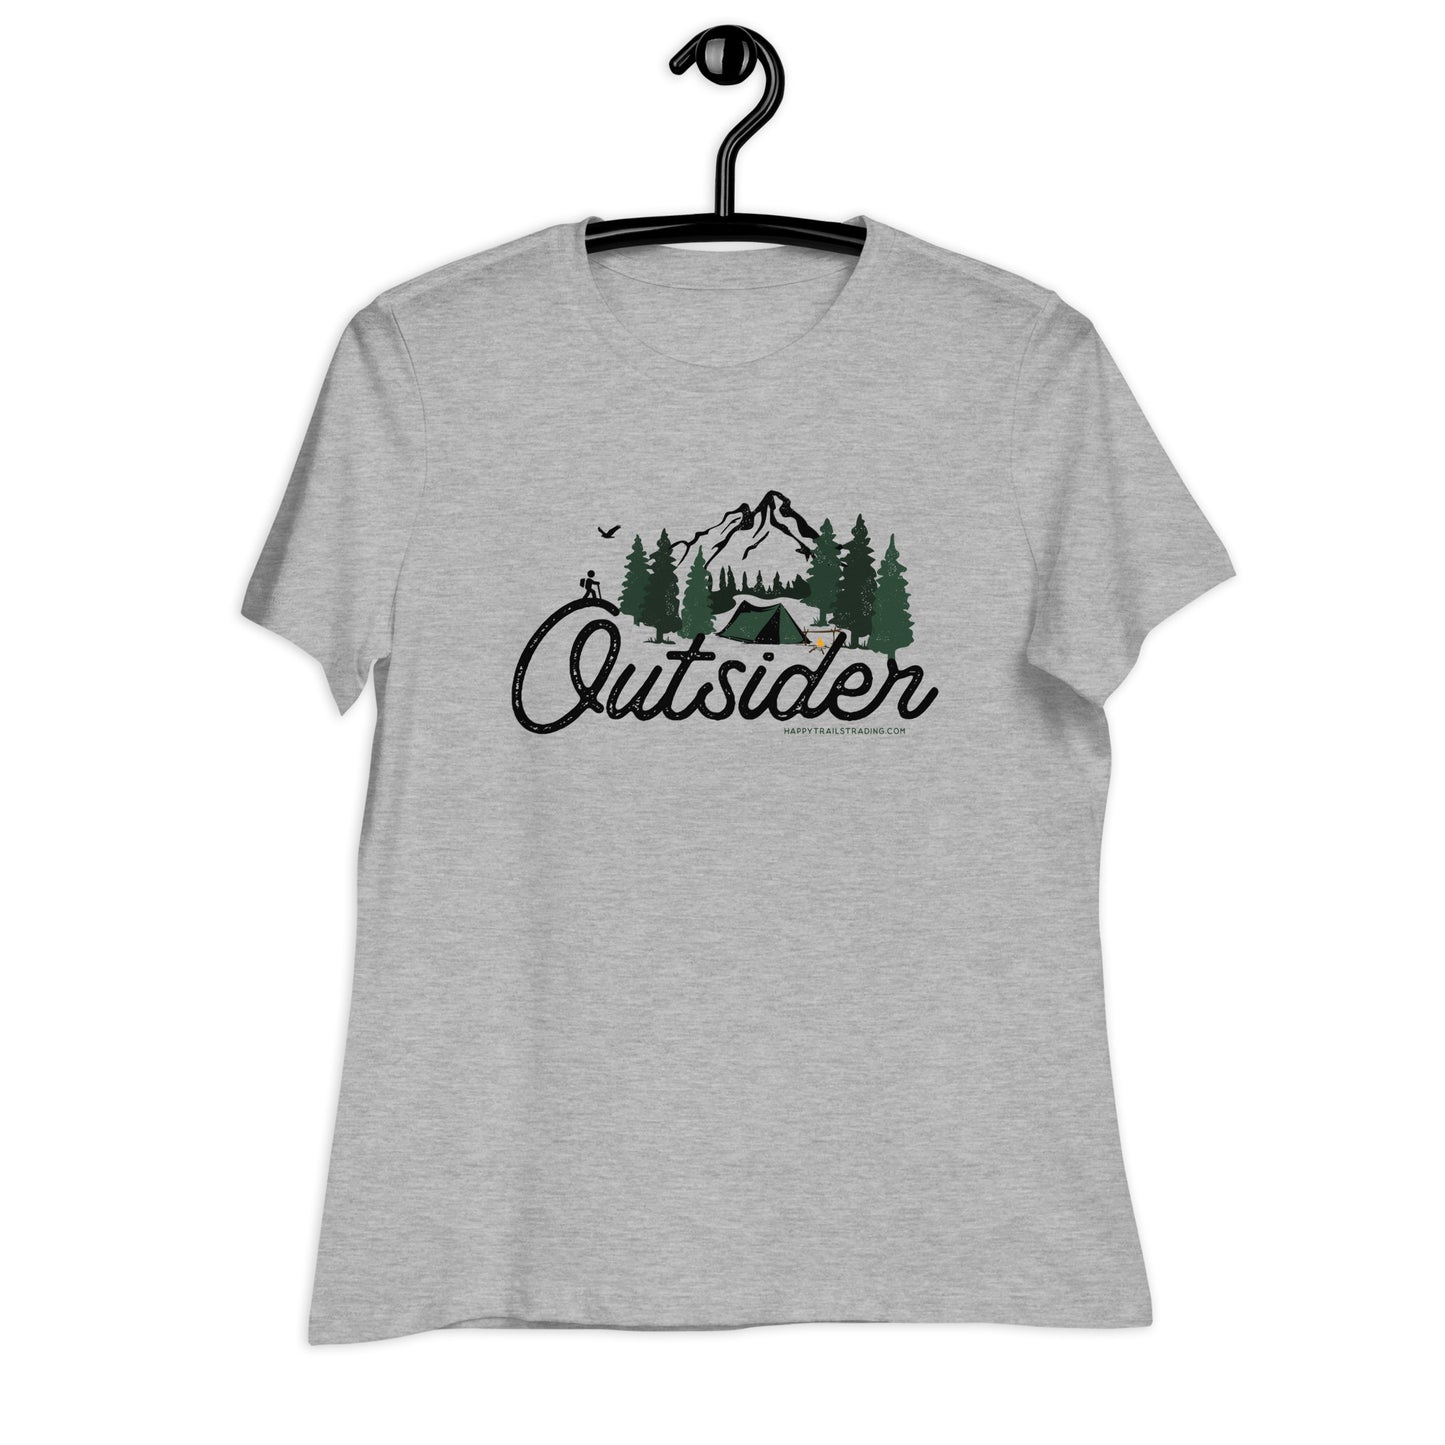 Outsider - Women's Relaxed T-Shirt